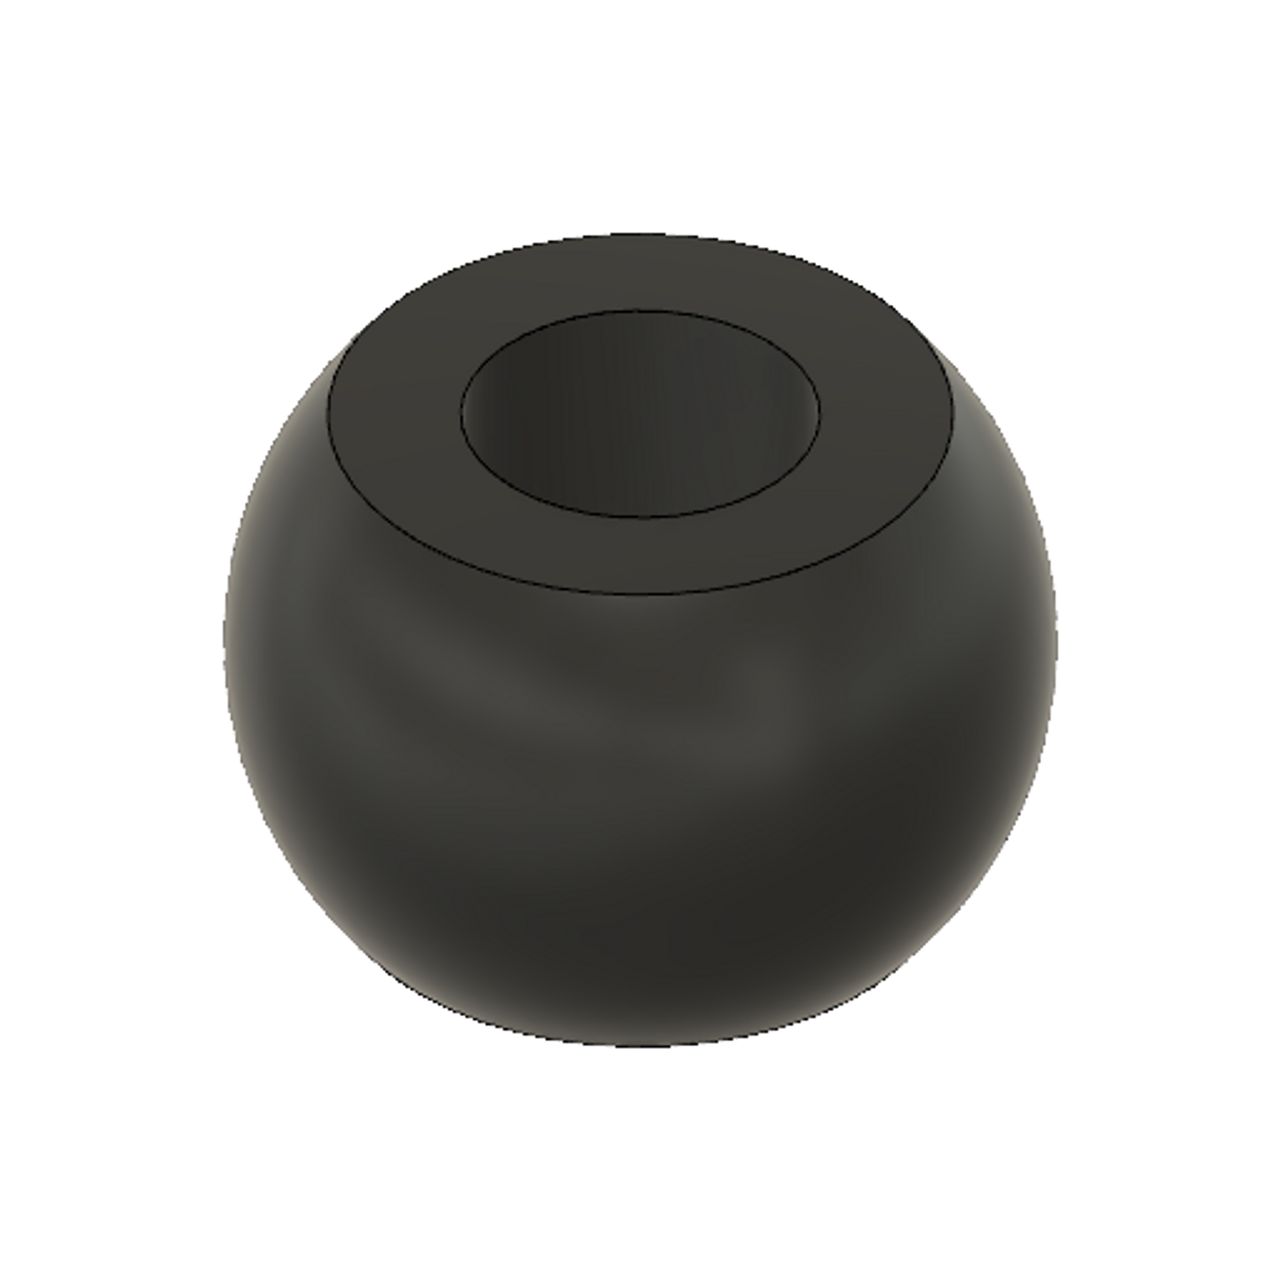 MWX Preformance Delrin Upper Arm balls (2pcs)